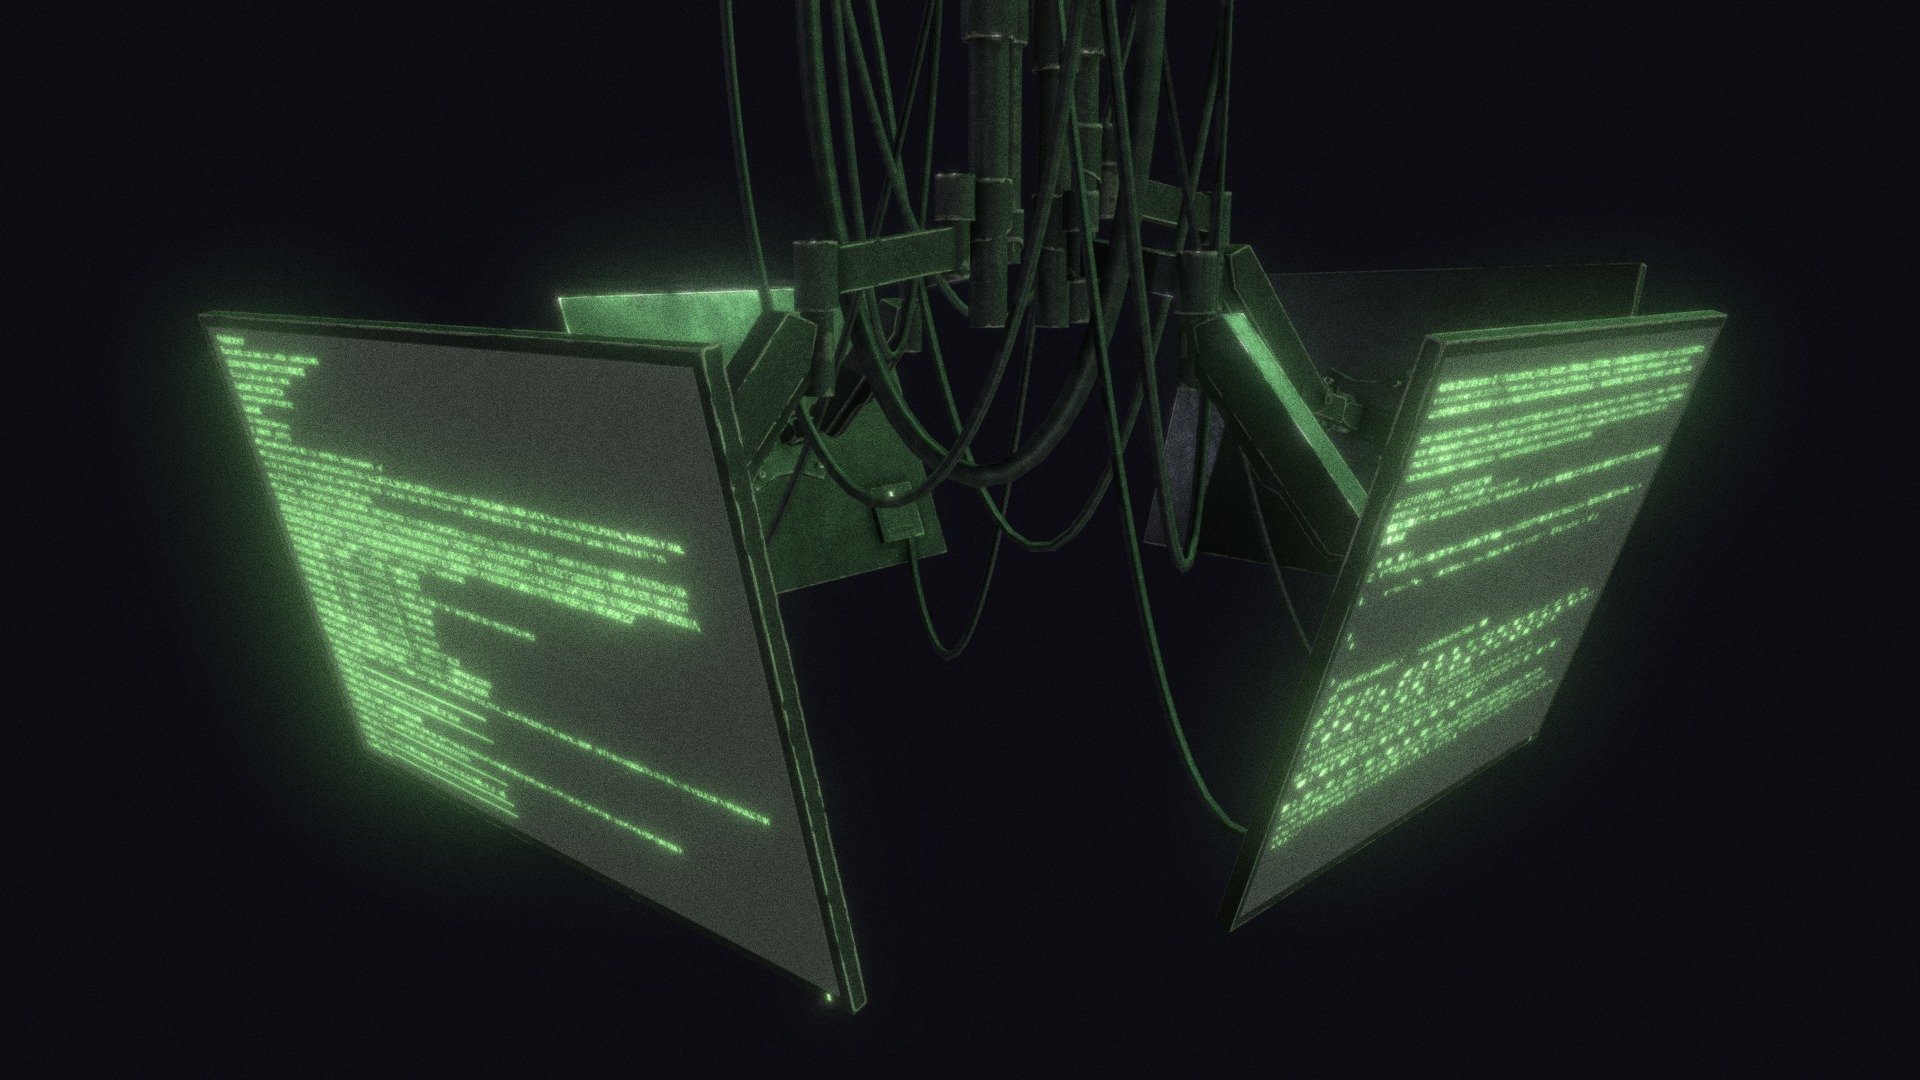 Game ready 3d model for Cyberpunk and Sci-fi scenes, with 2K PBR textures. 
Purchase: https://www.artstation.com/a/18470469 - Cyberpunk Screens - 3D model by Crazy_8 (@korboleevd) 3d model